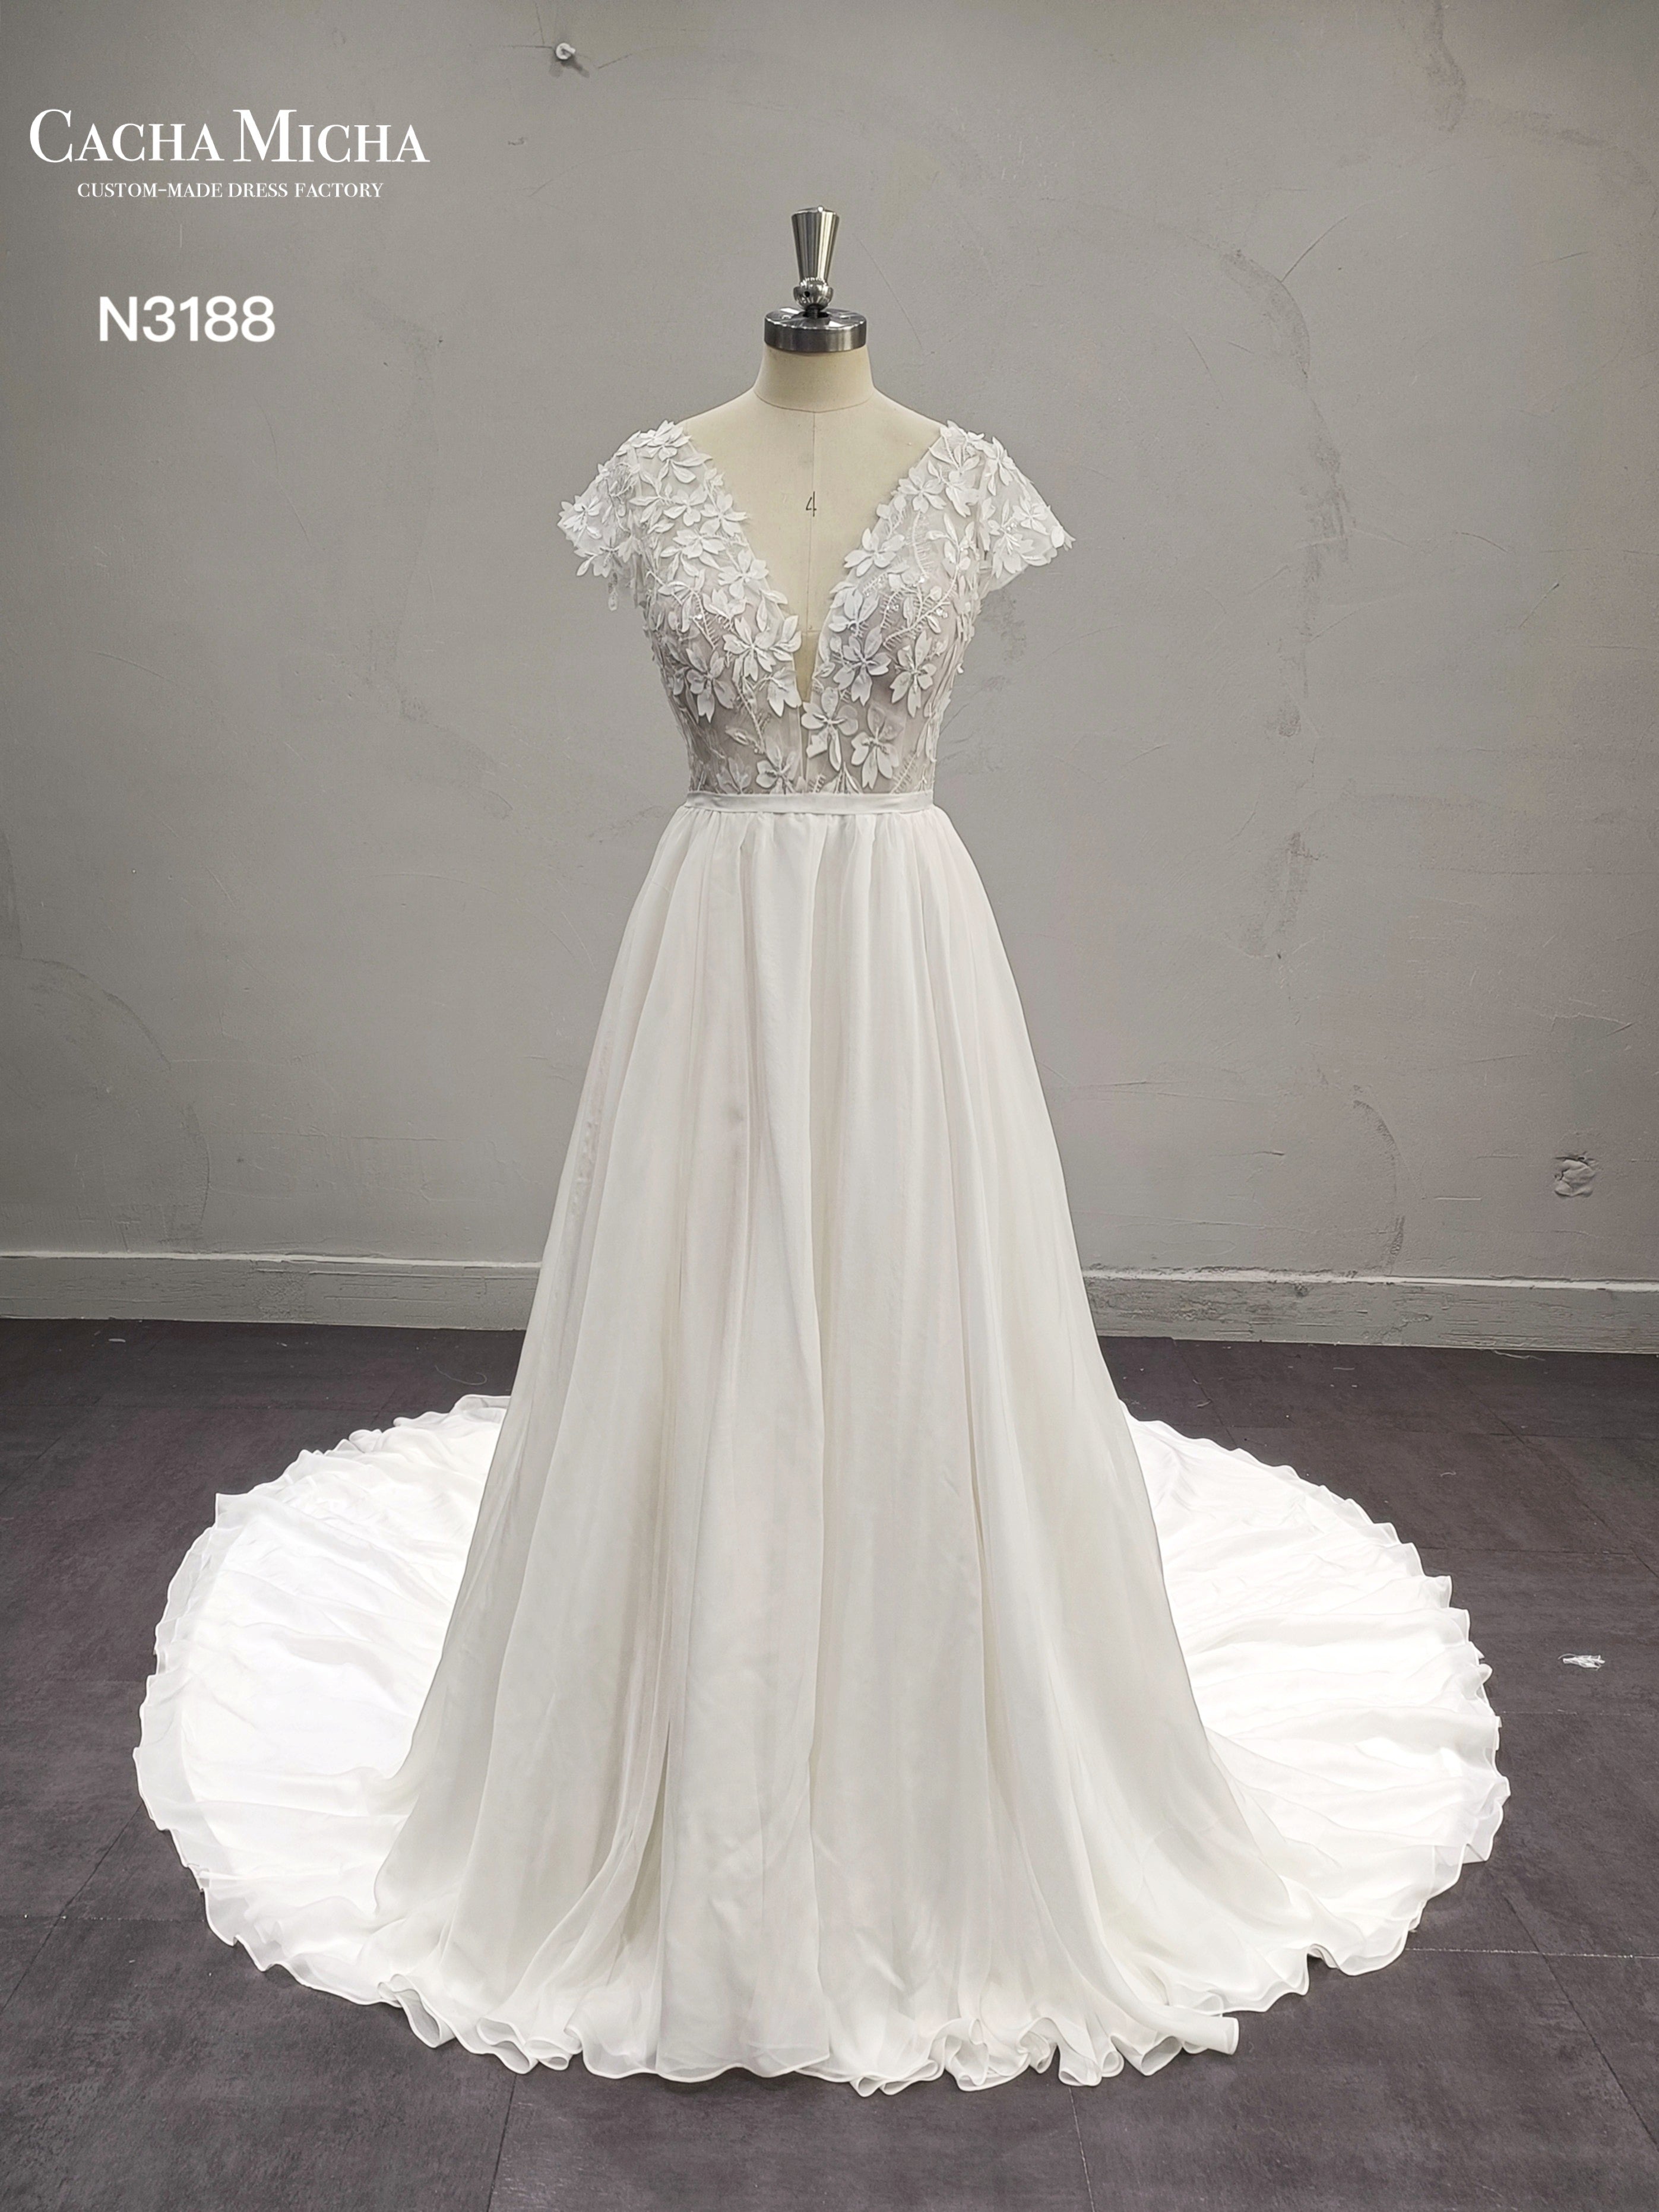 3D Lace Top Chiffon Skirt Wedding Dress N3188